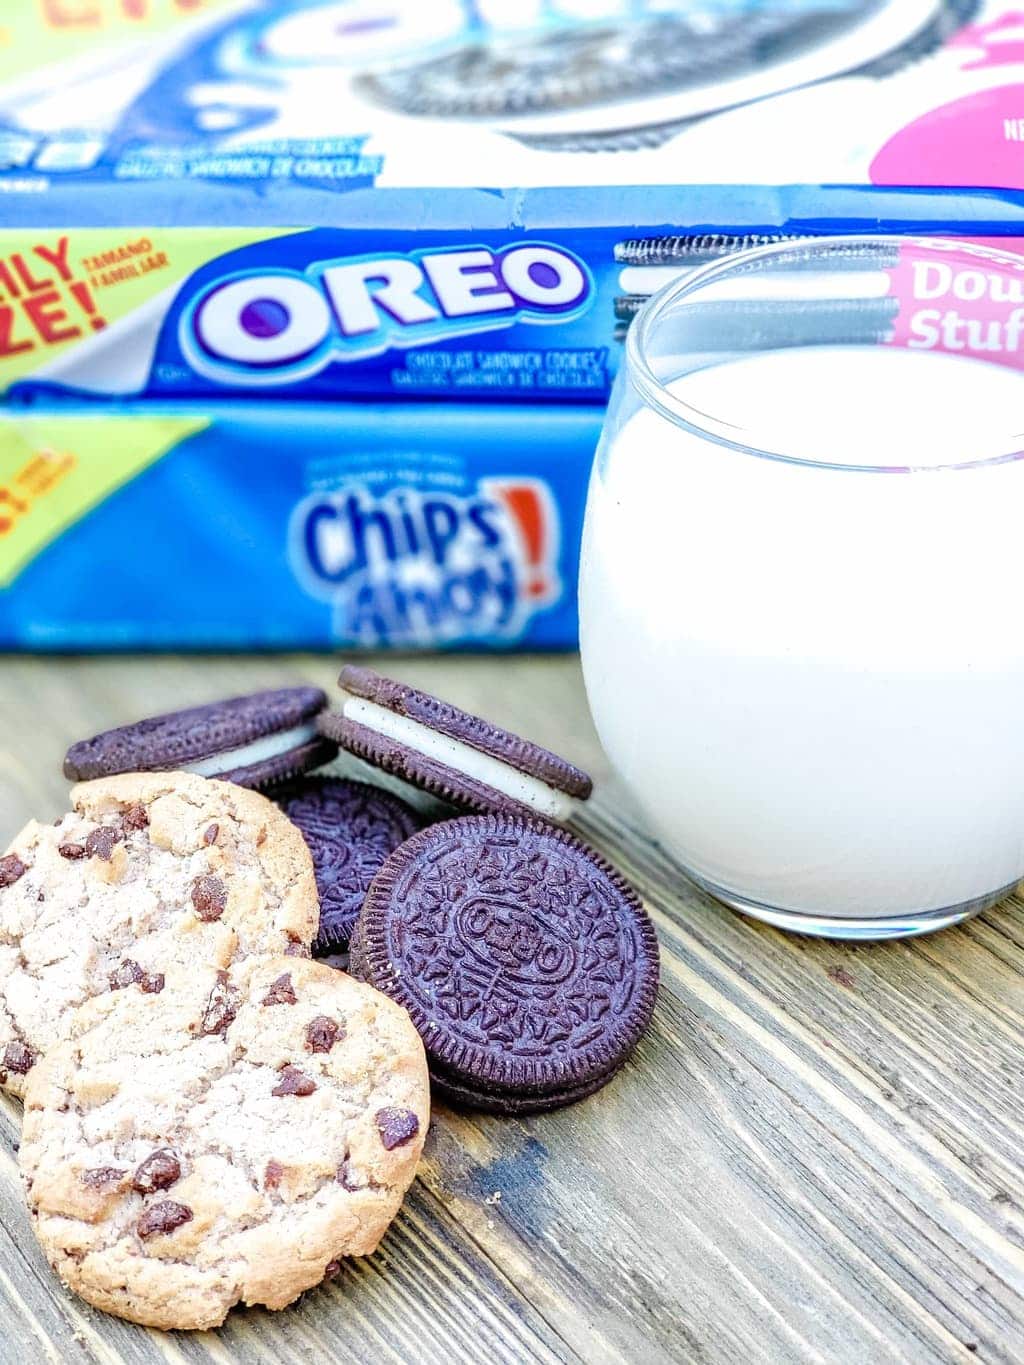 oreo-cookies-after-school-snack